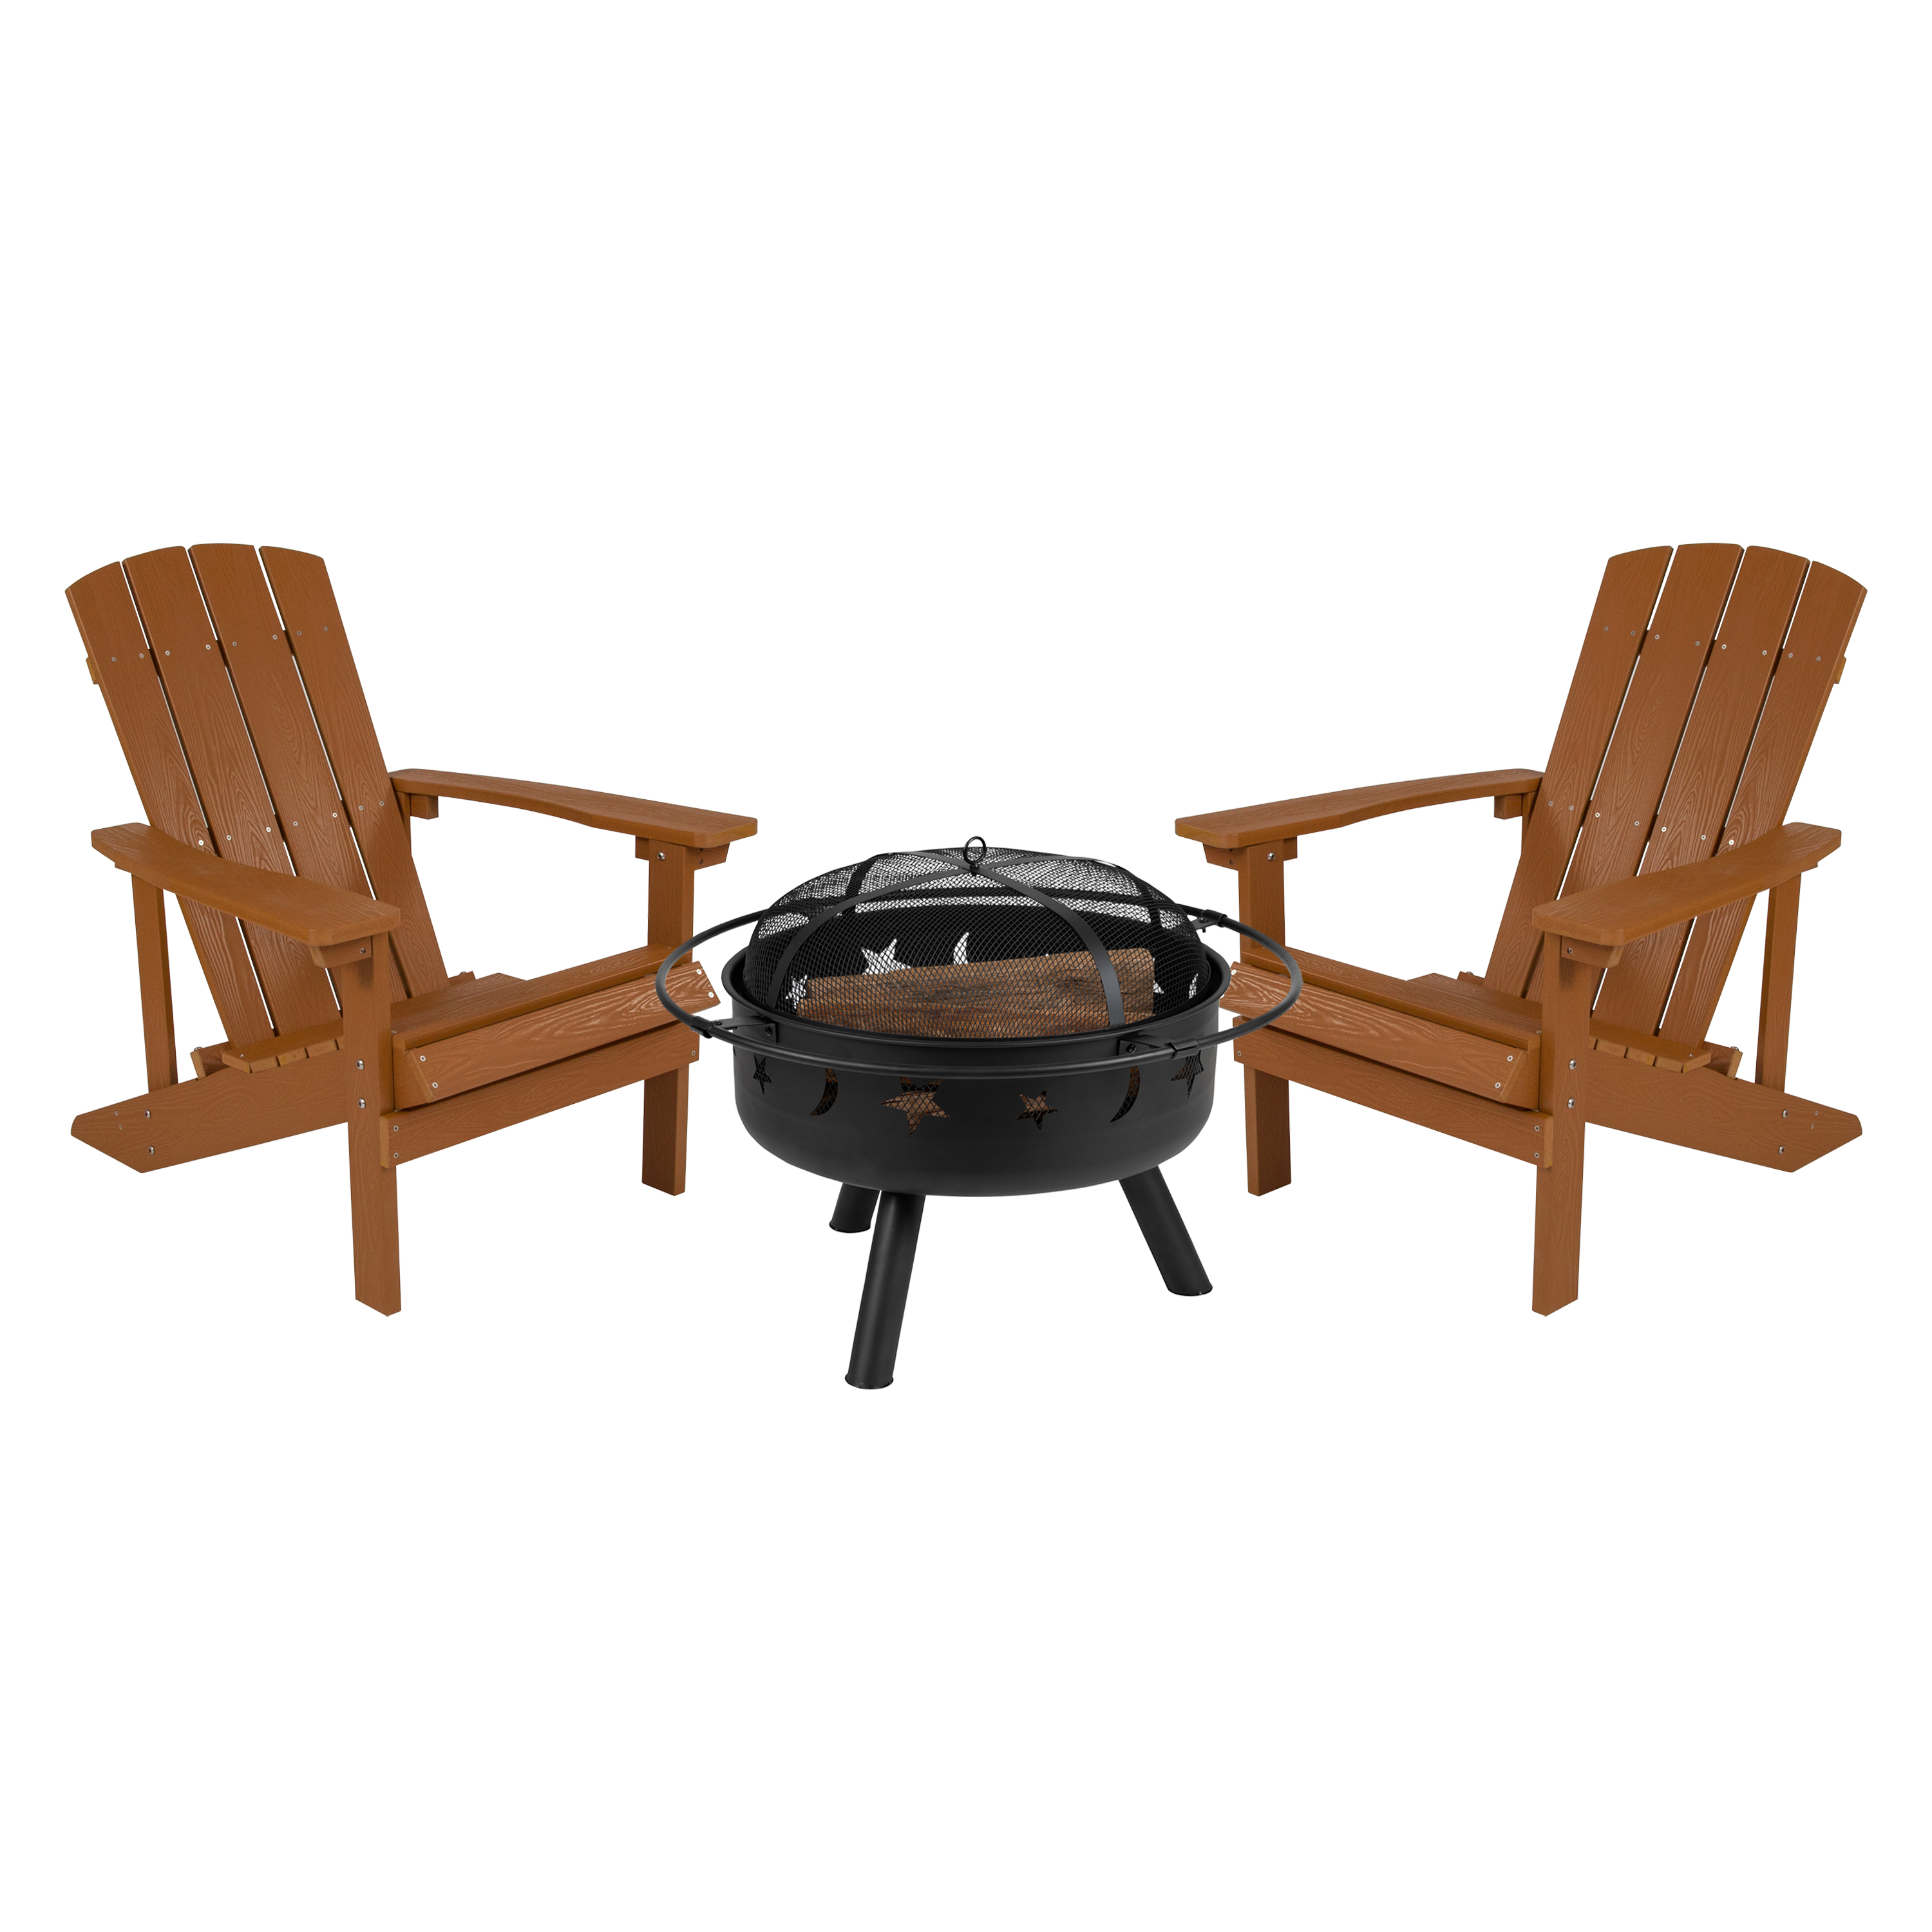 Flash Furniture JJ-C145012-32D-TEAK-GG 3 Piece Teak Poly Resin Wood Adirondack Chair Set with Fire Pit